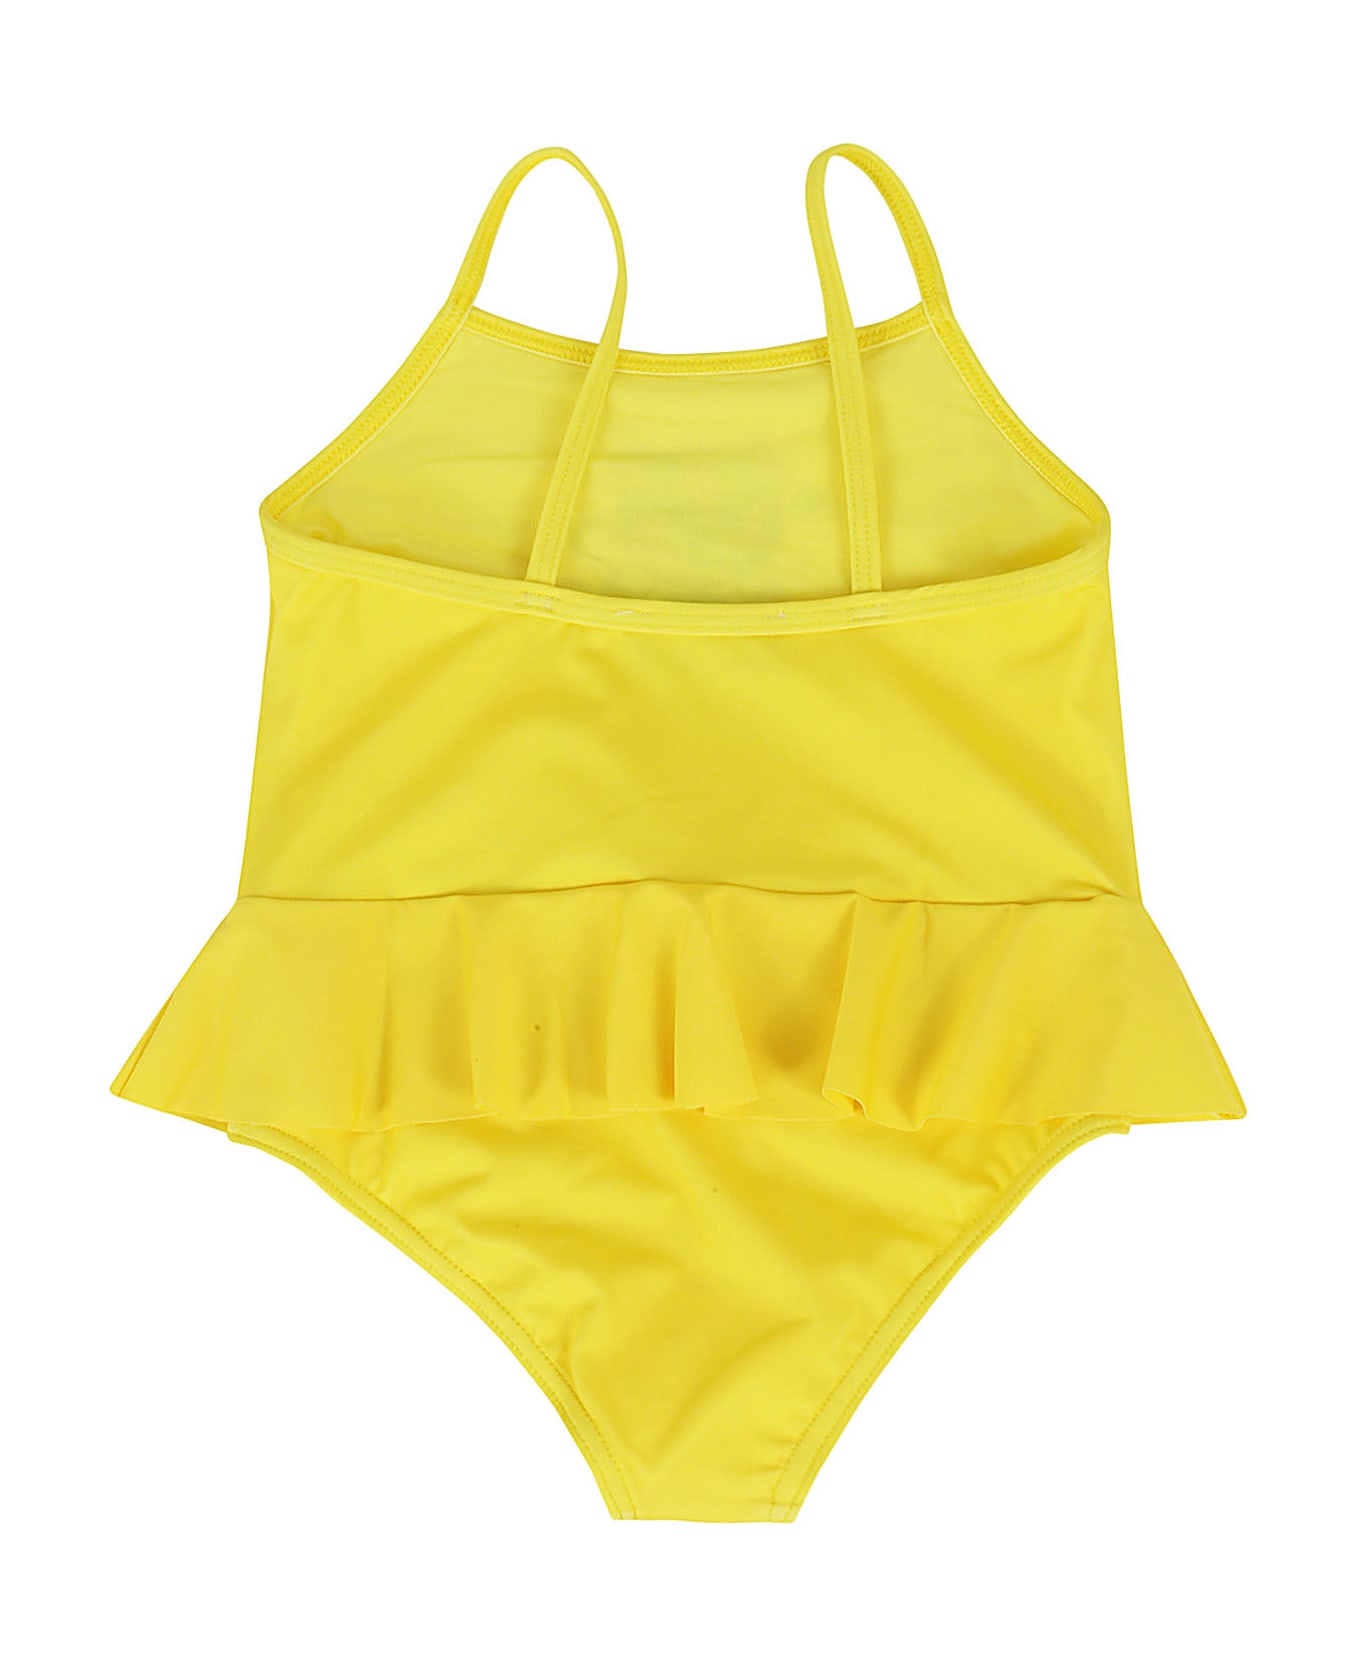 Moschino Swimsuit - Cyber Yellow